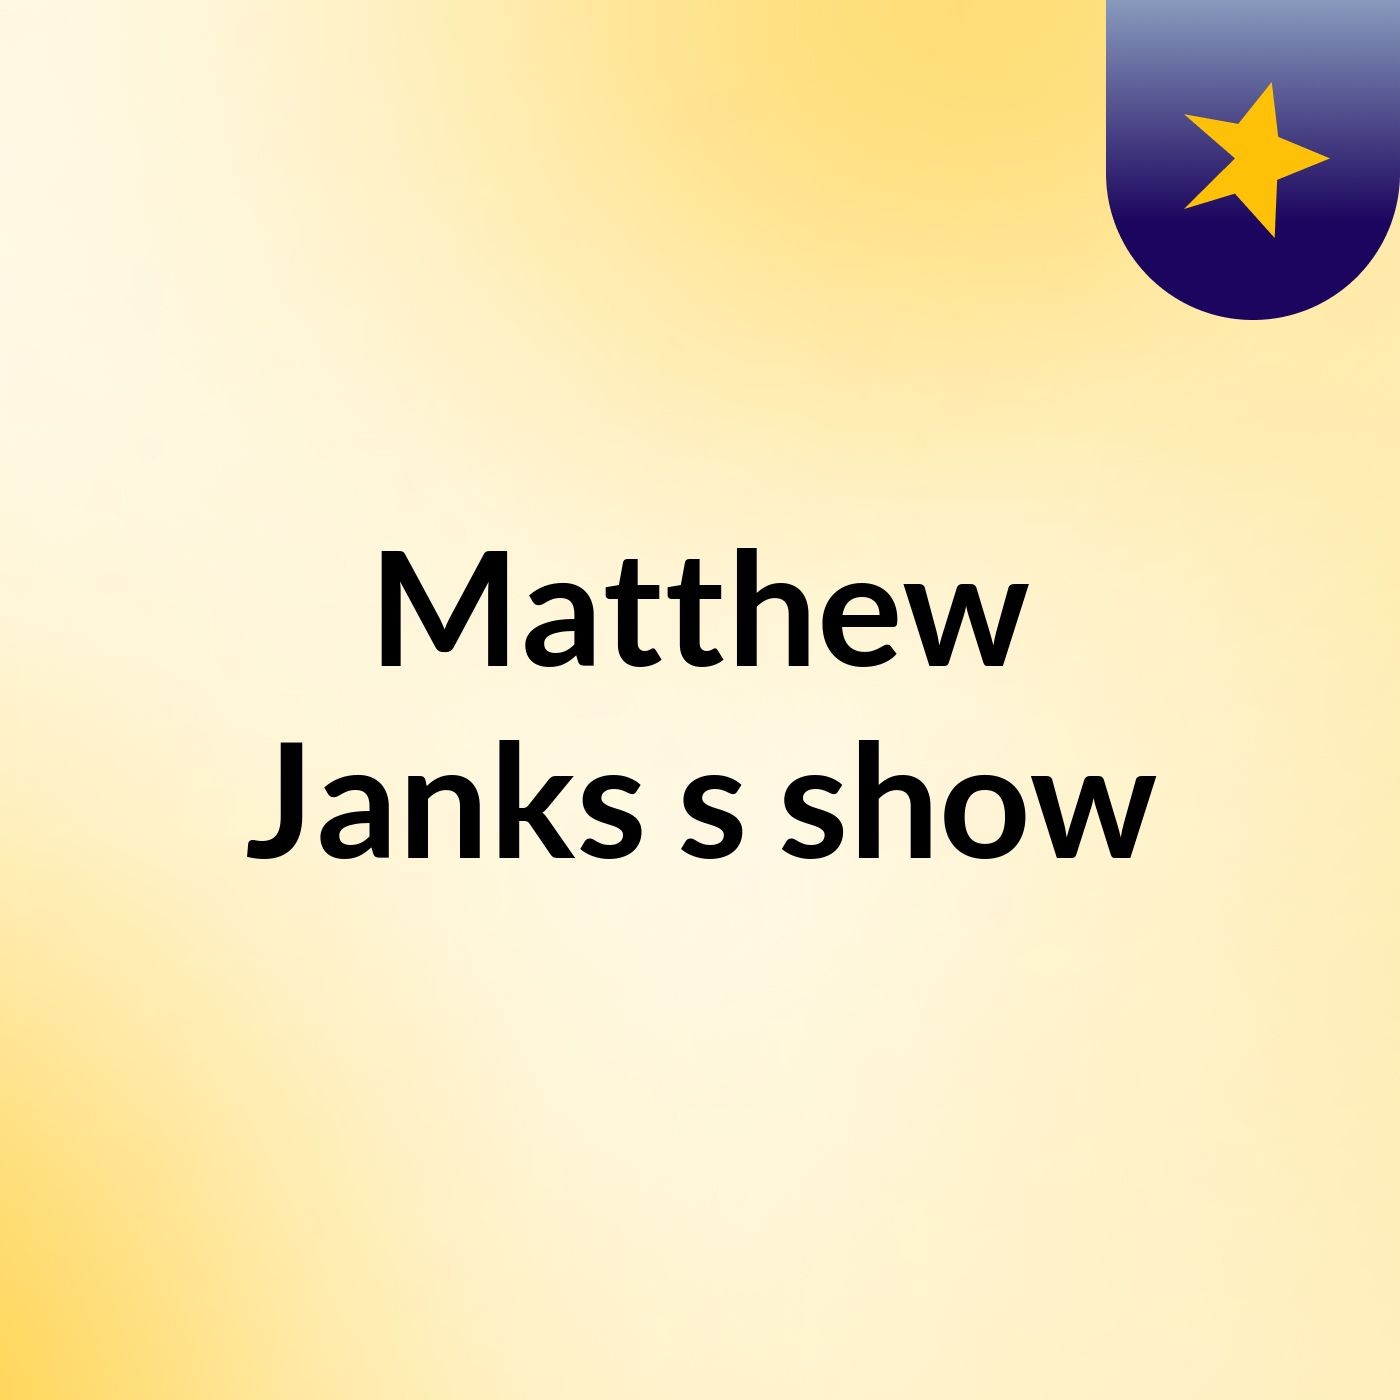 Matthew Janks's show